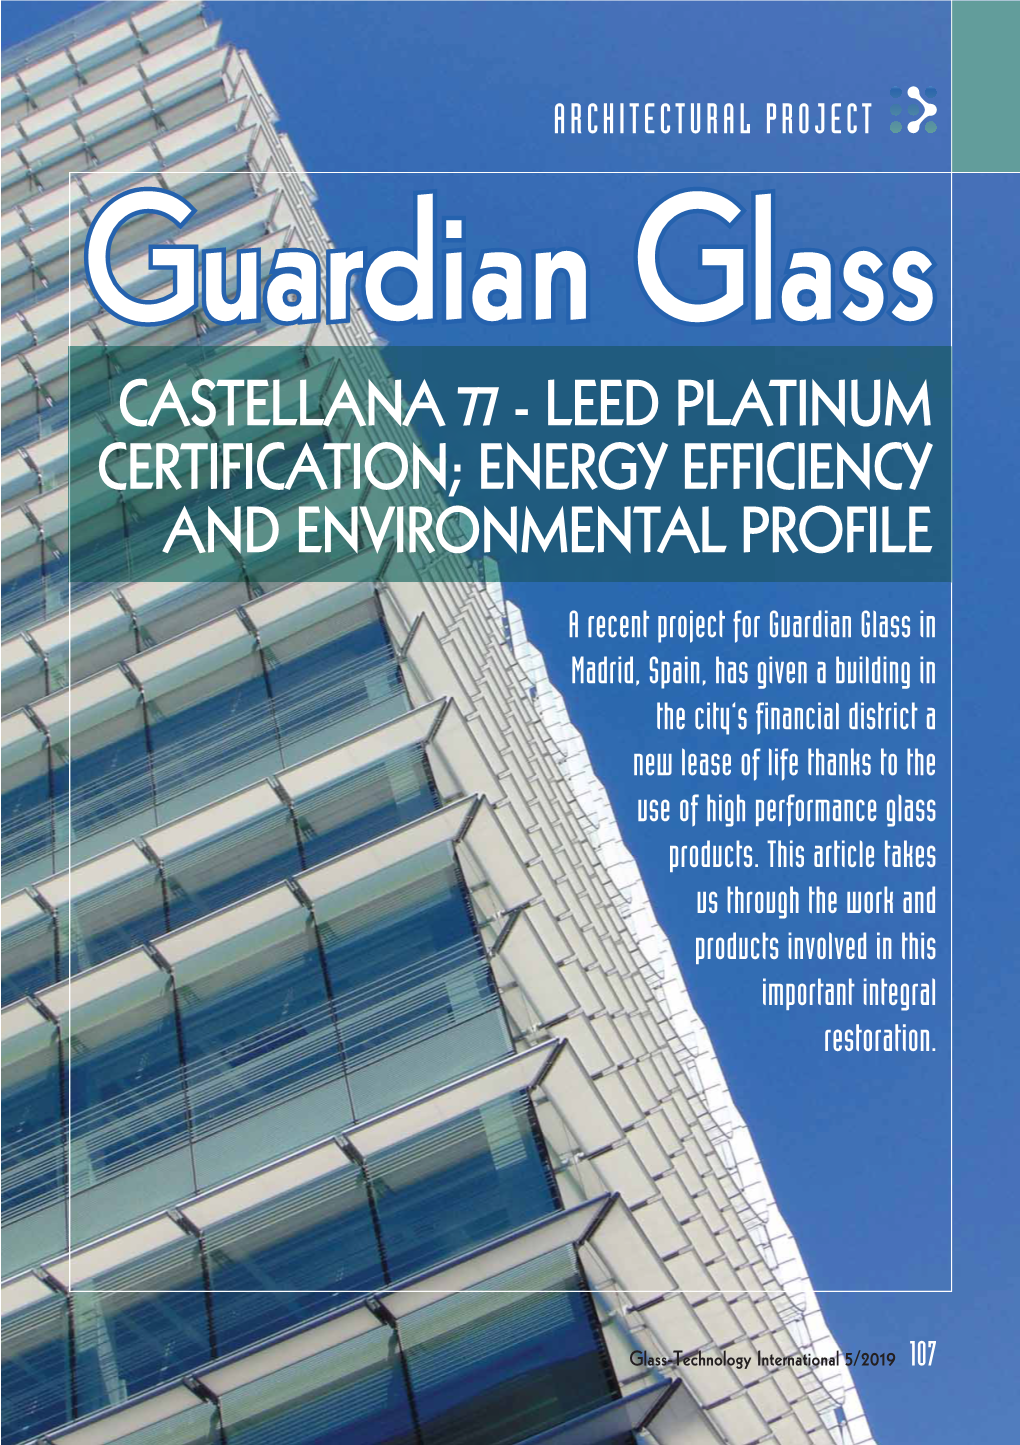 Leed Platinum Certification; Energy Efficiency and Environmental Profile